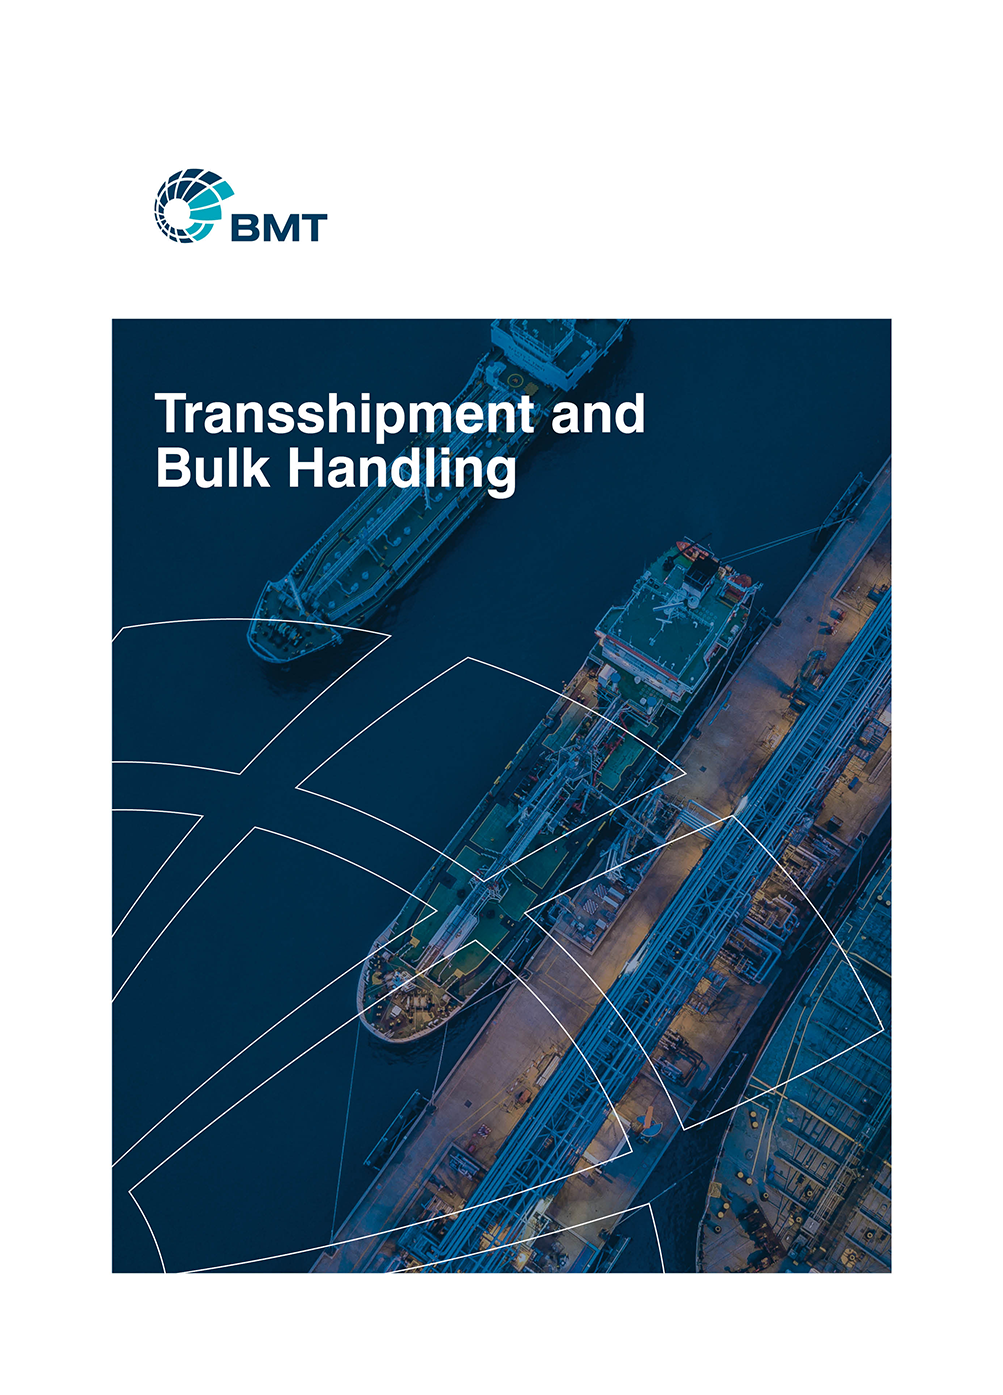 BMT's transshipment and bulk handling services